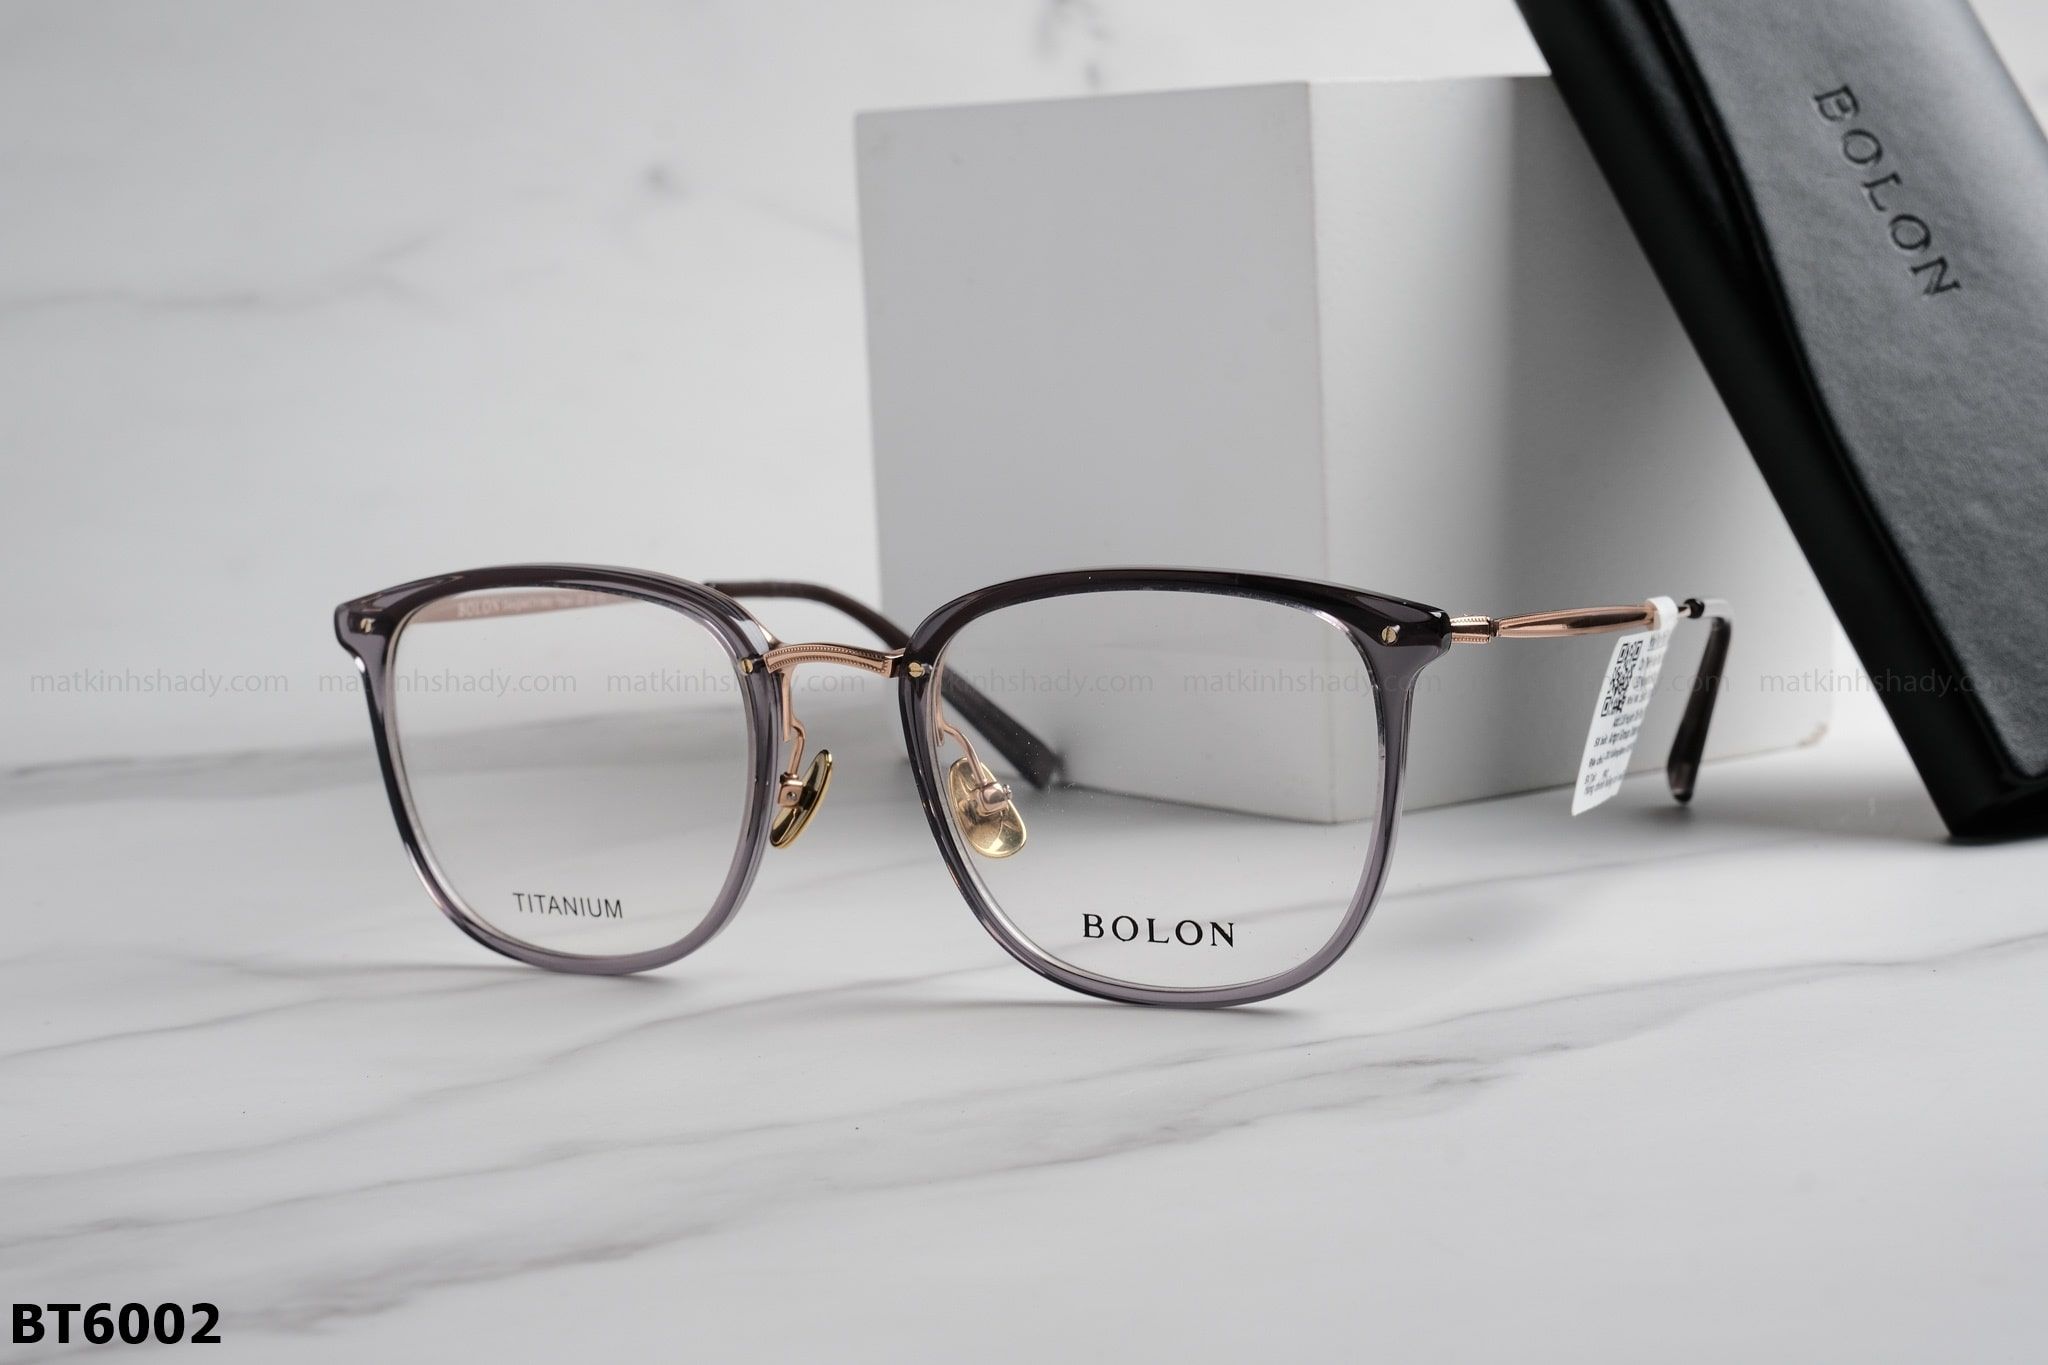  Bolon Eyewear - Glasses - BT6002 